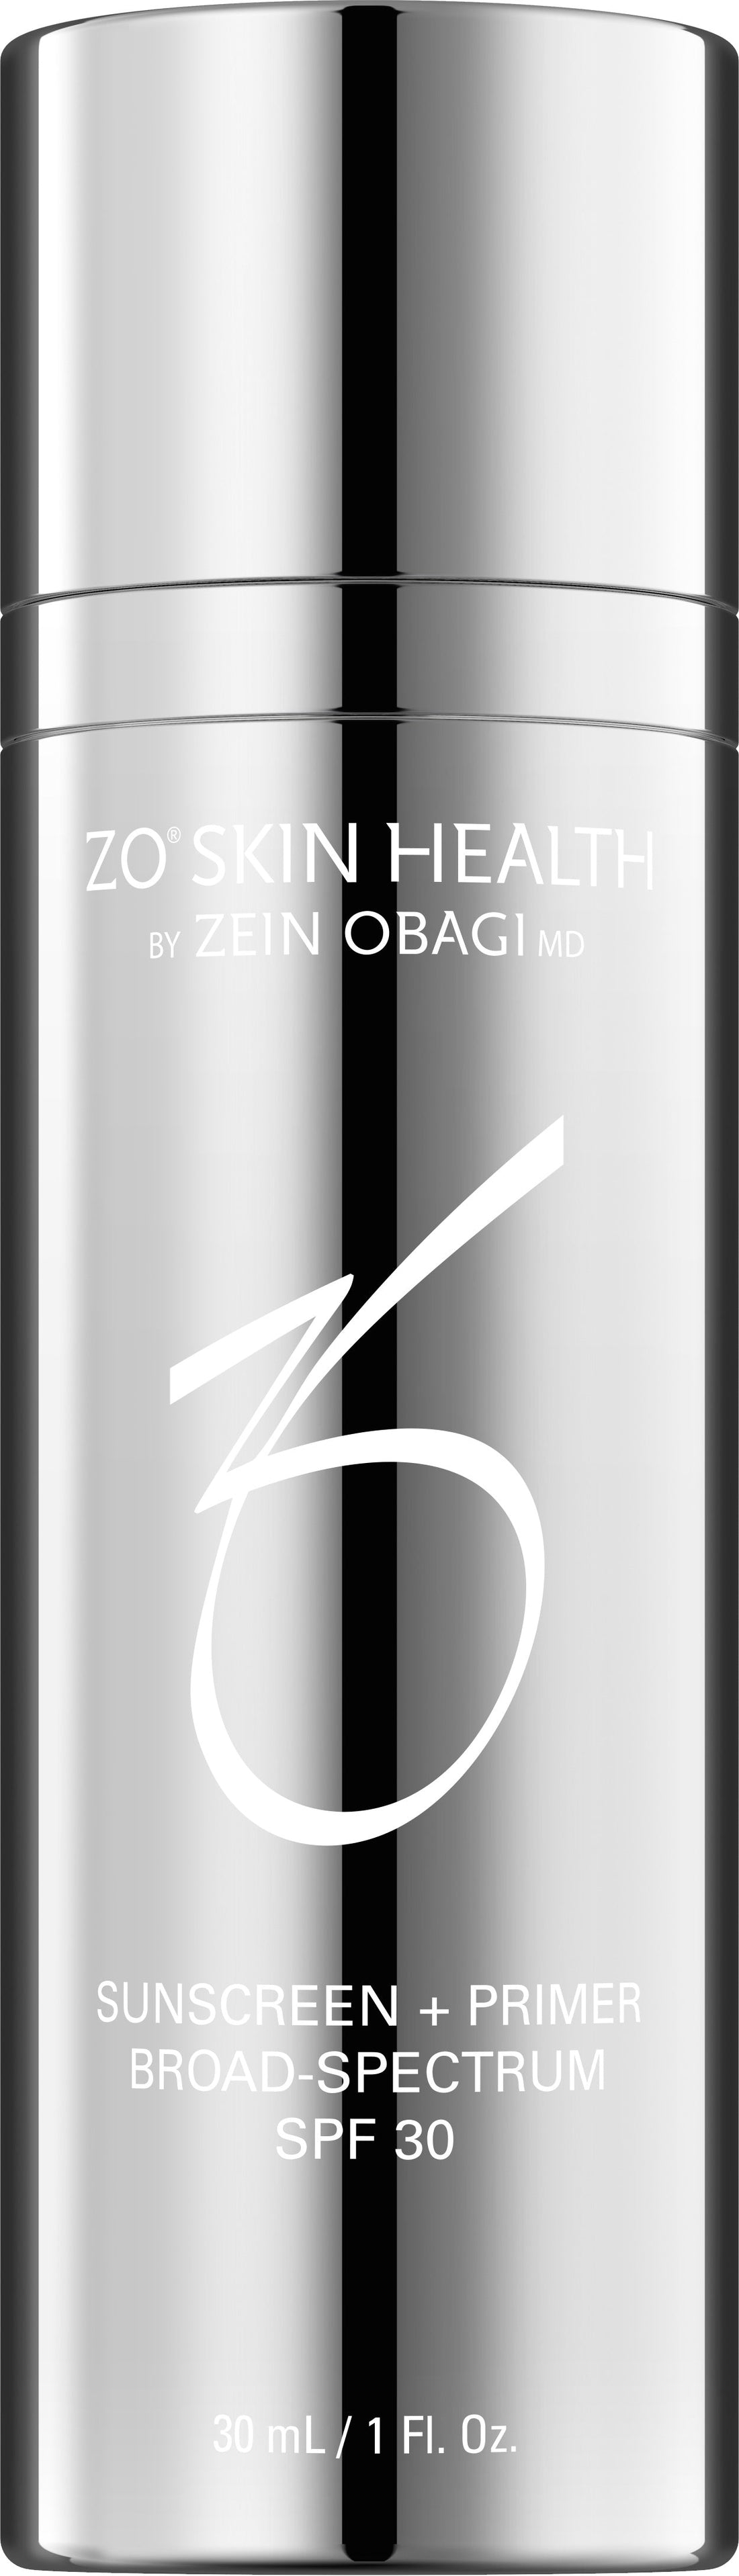 ZO Skin Health Sunscreen + Primer SPF 30 30ml